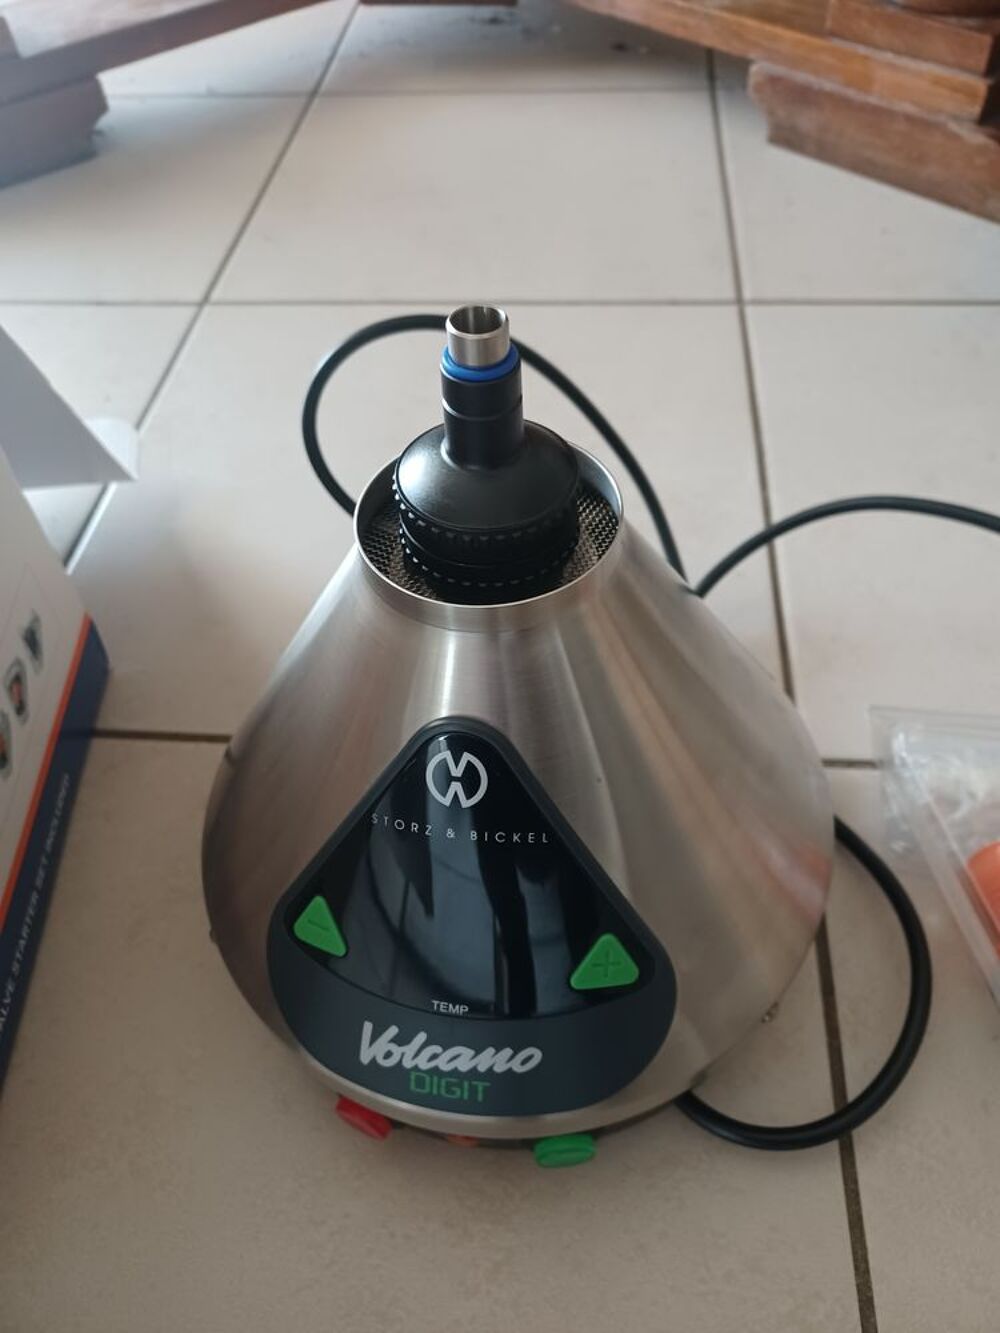 Vaporisateur Volcano digit easy valve Electromnager